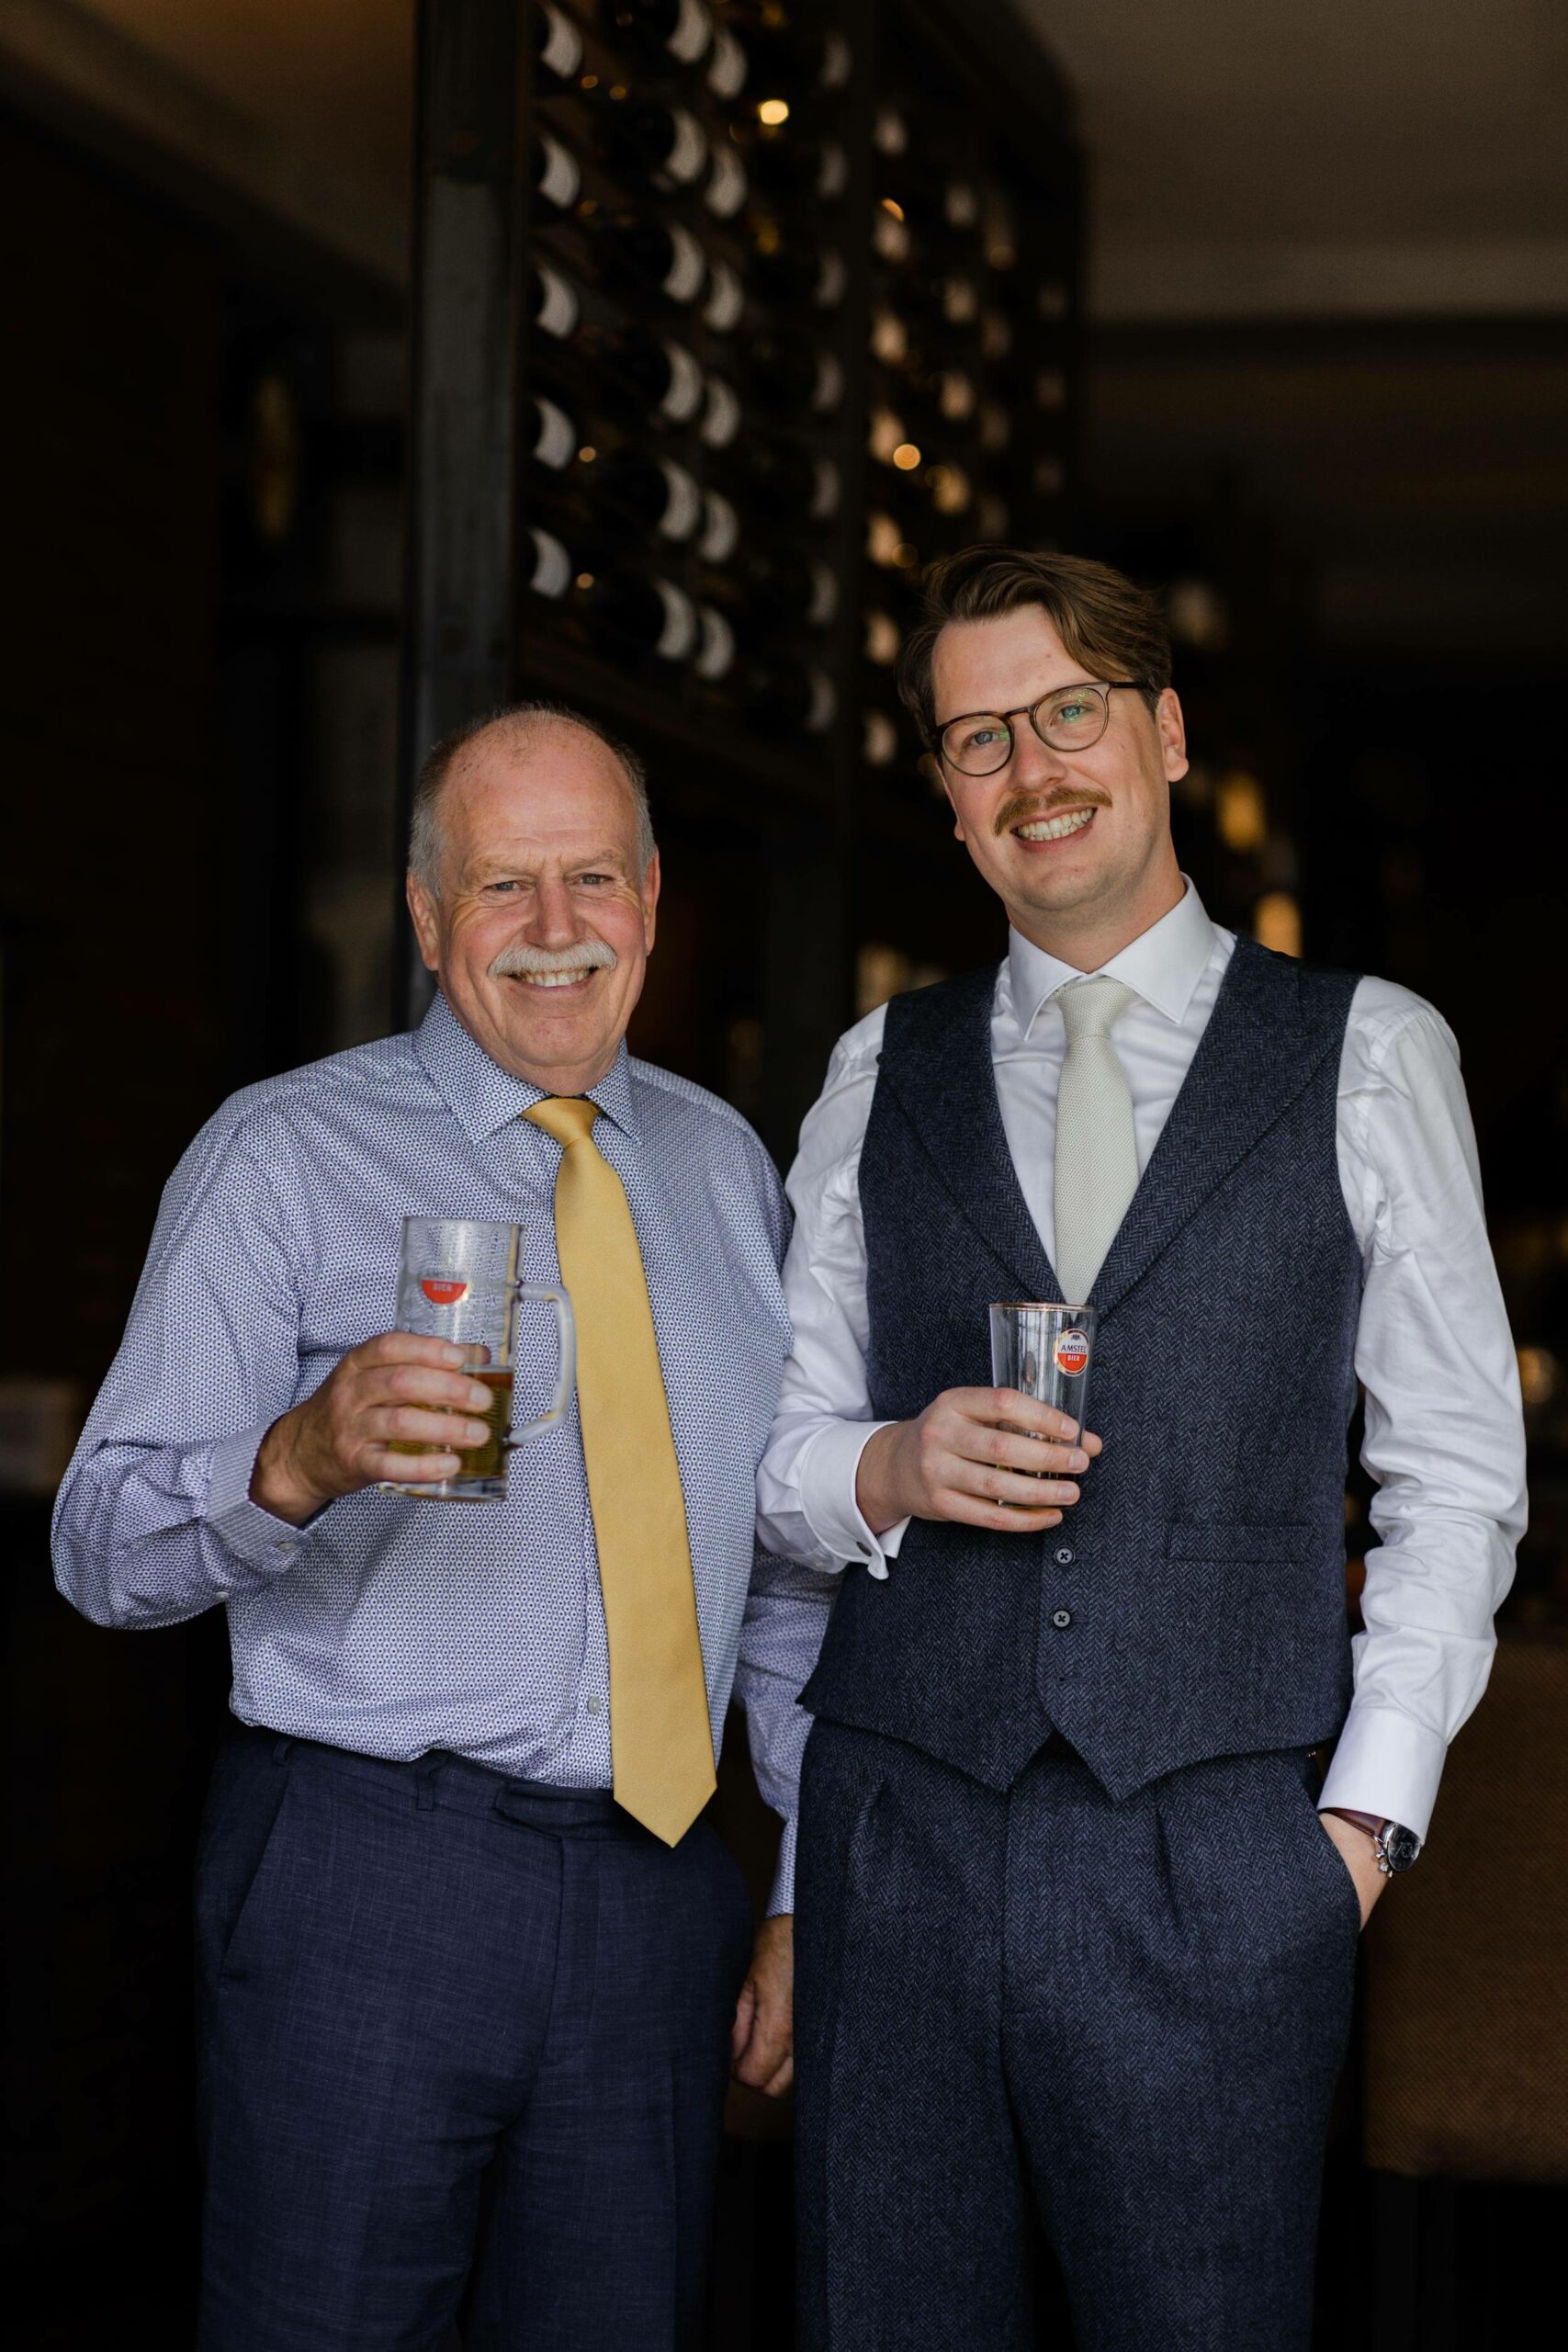 alt="summer Amsterdam wedding groom with father enjoying beers"